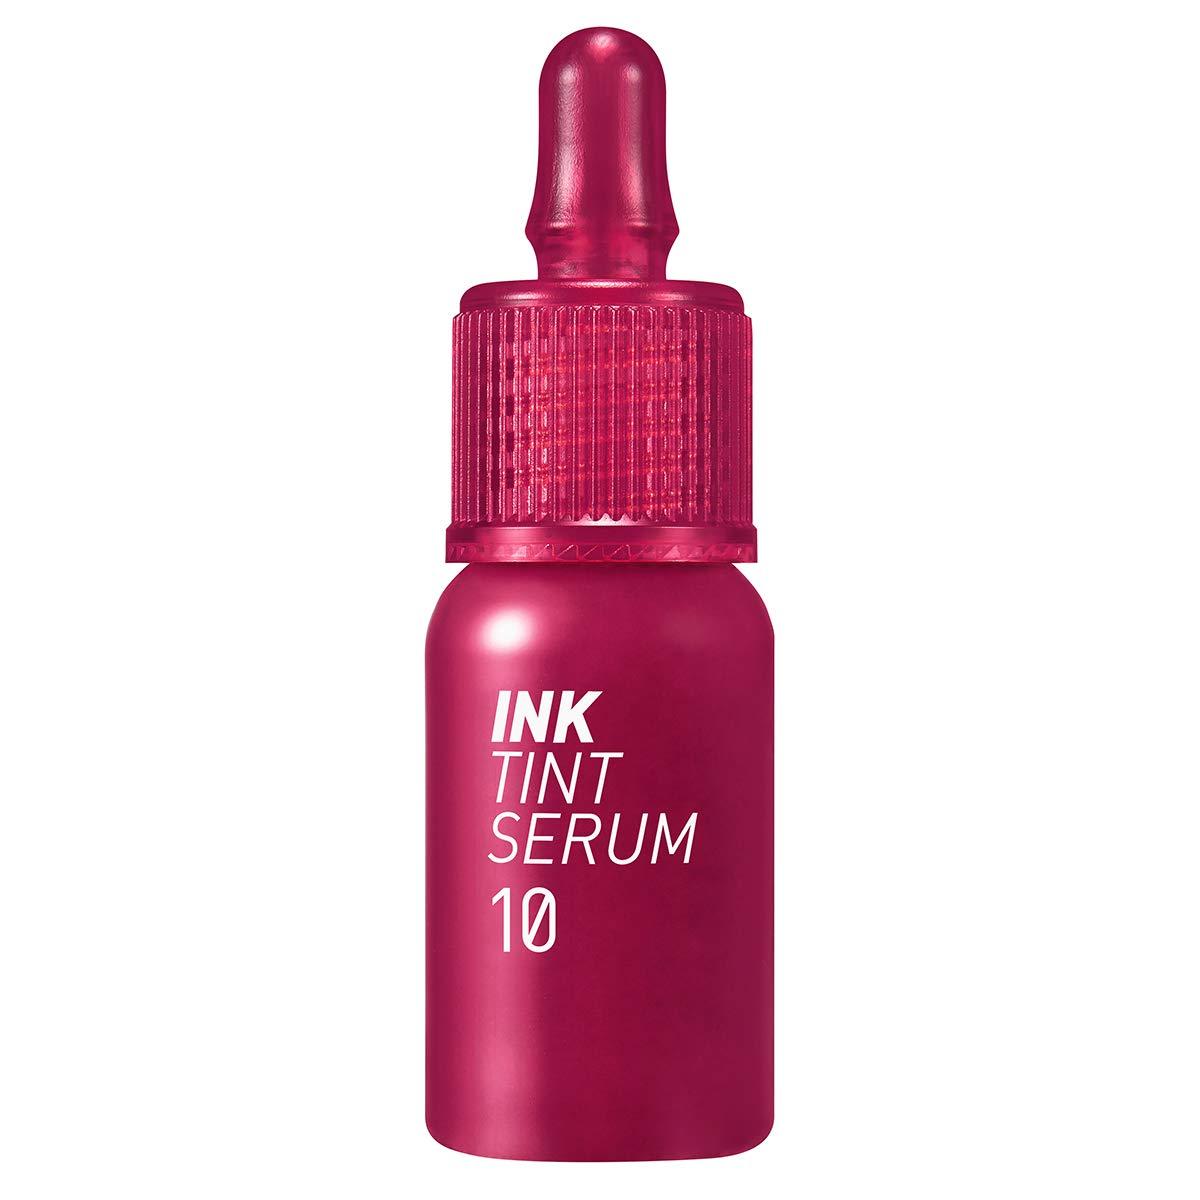 Ink Tint Serum